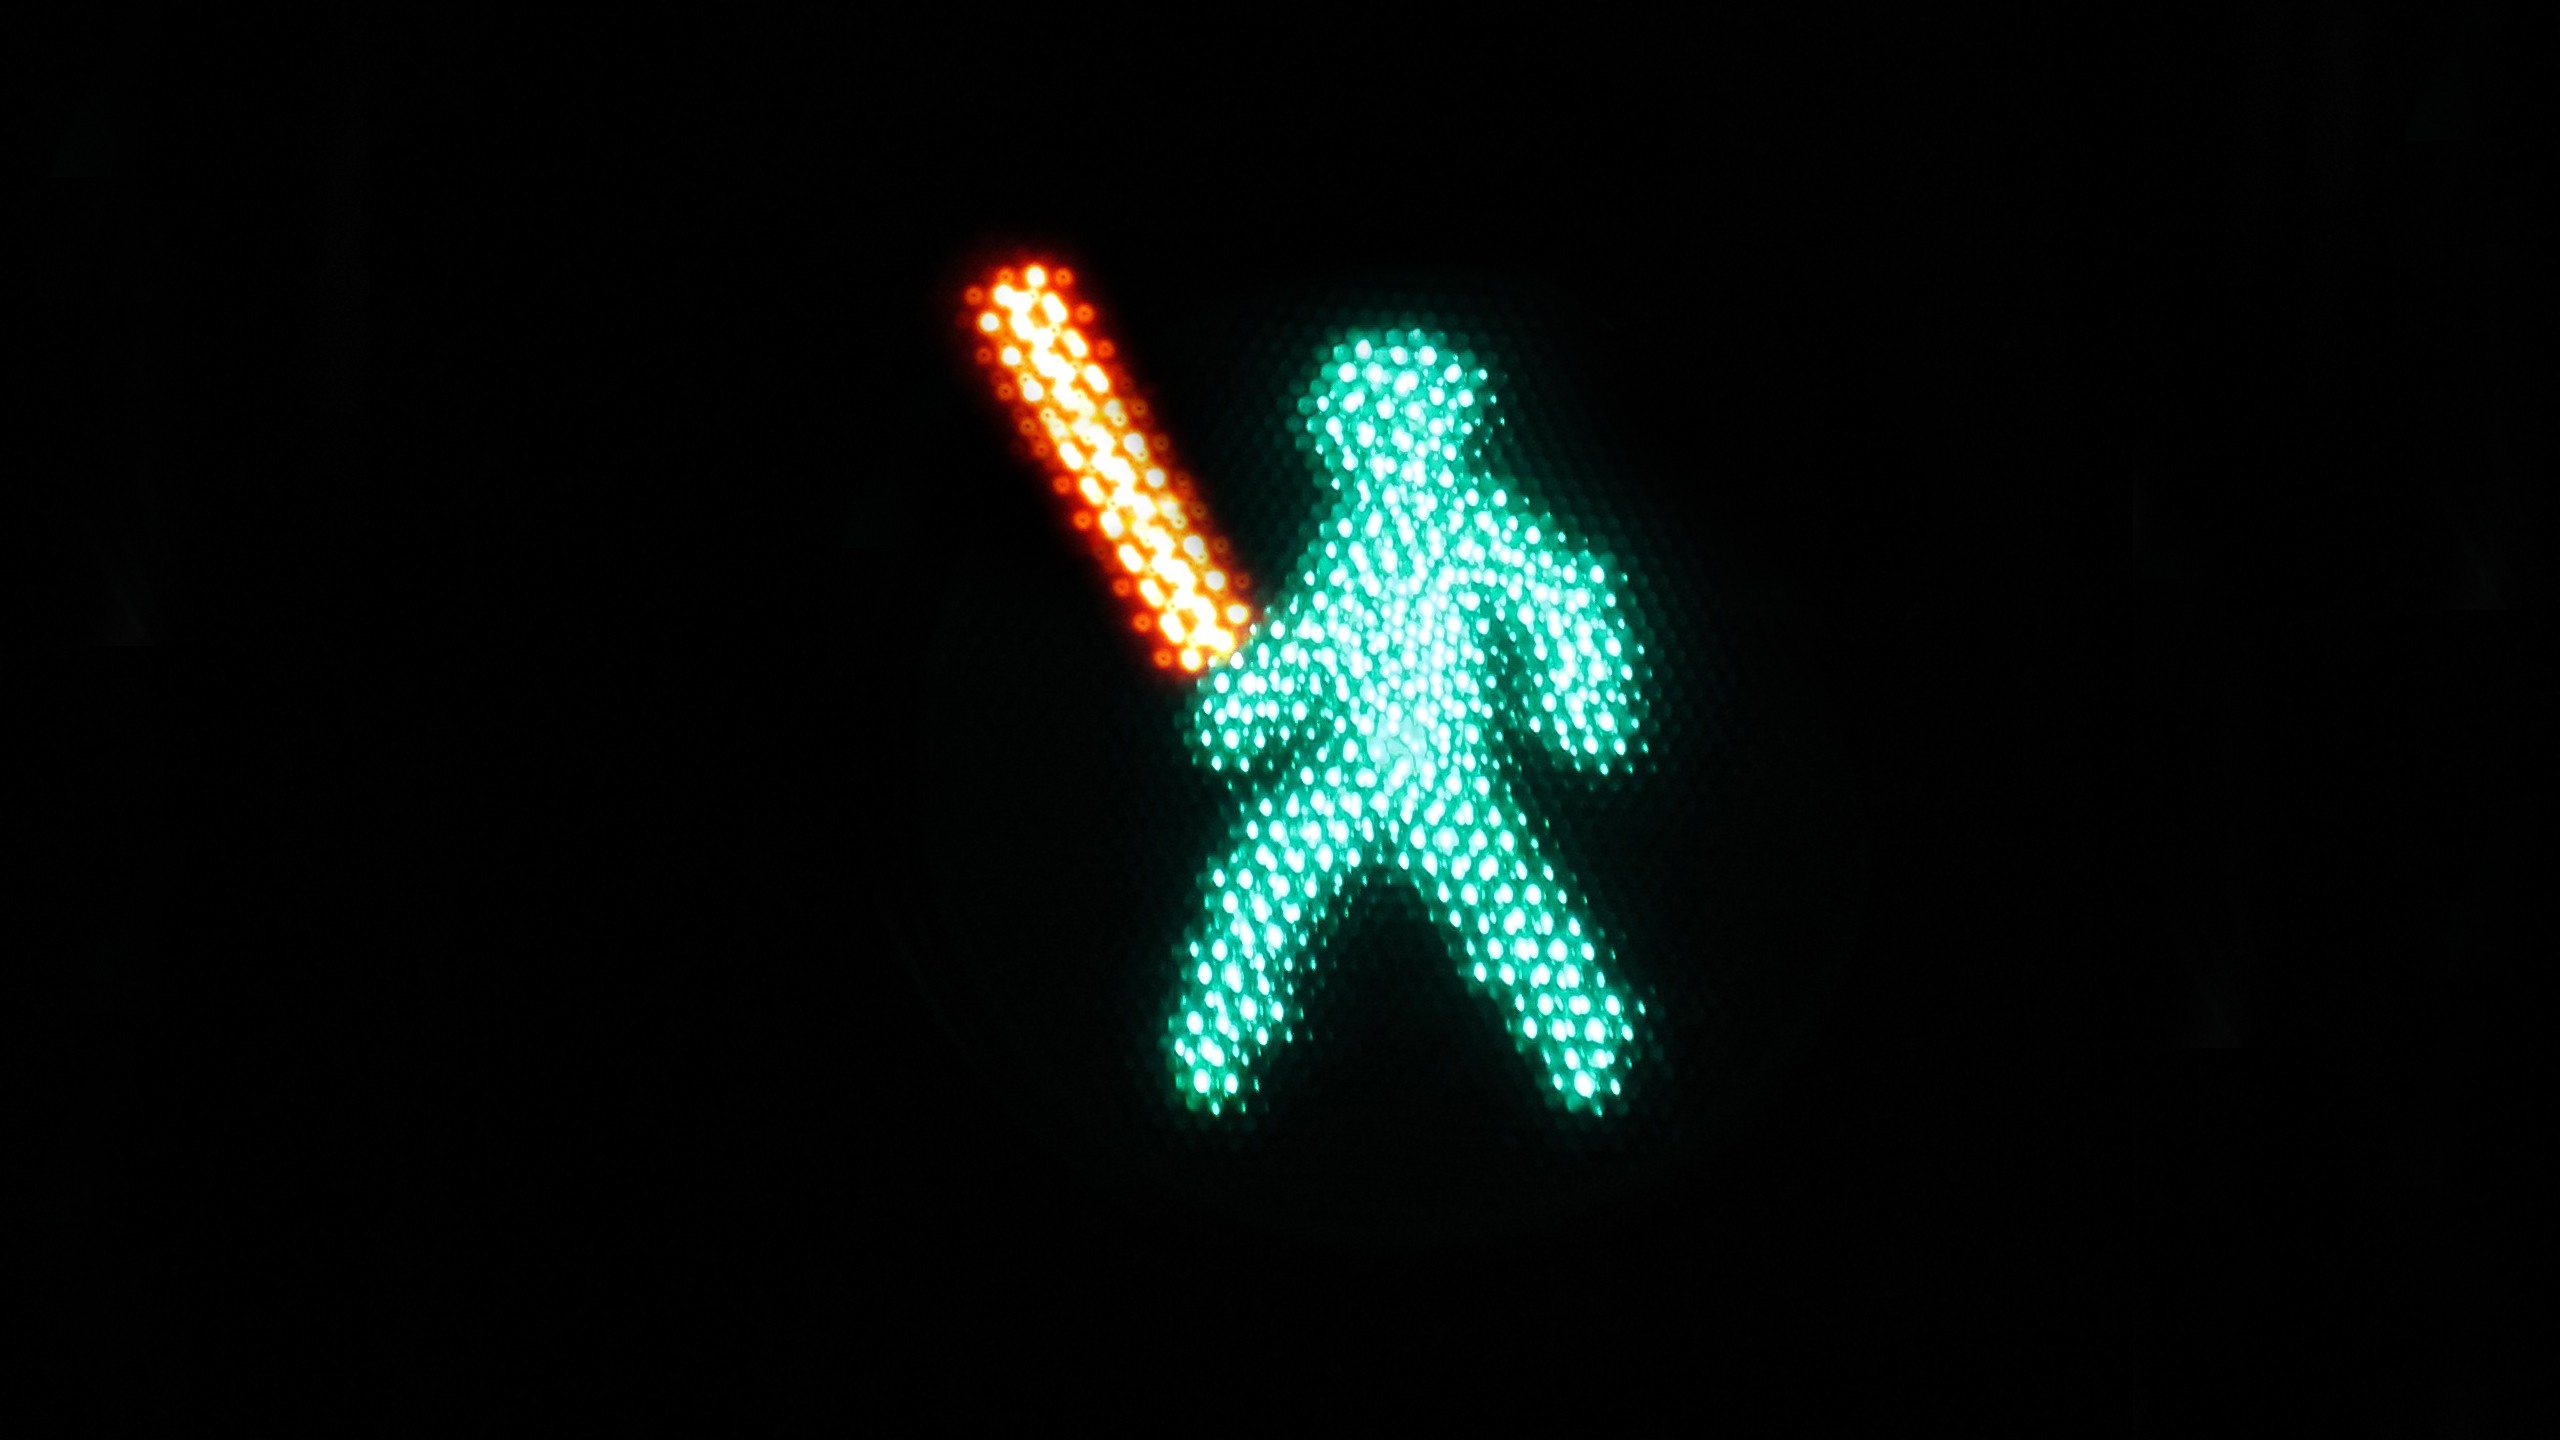 General 2560x1440 Star Wars lightsaber traffic lights photoshopped minimalism turquoise black background humor